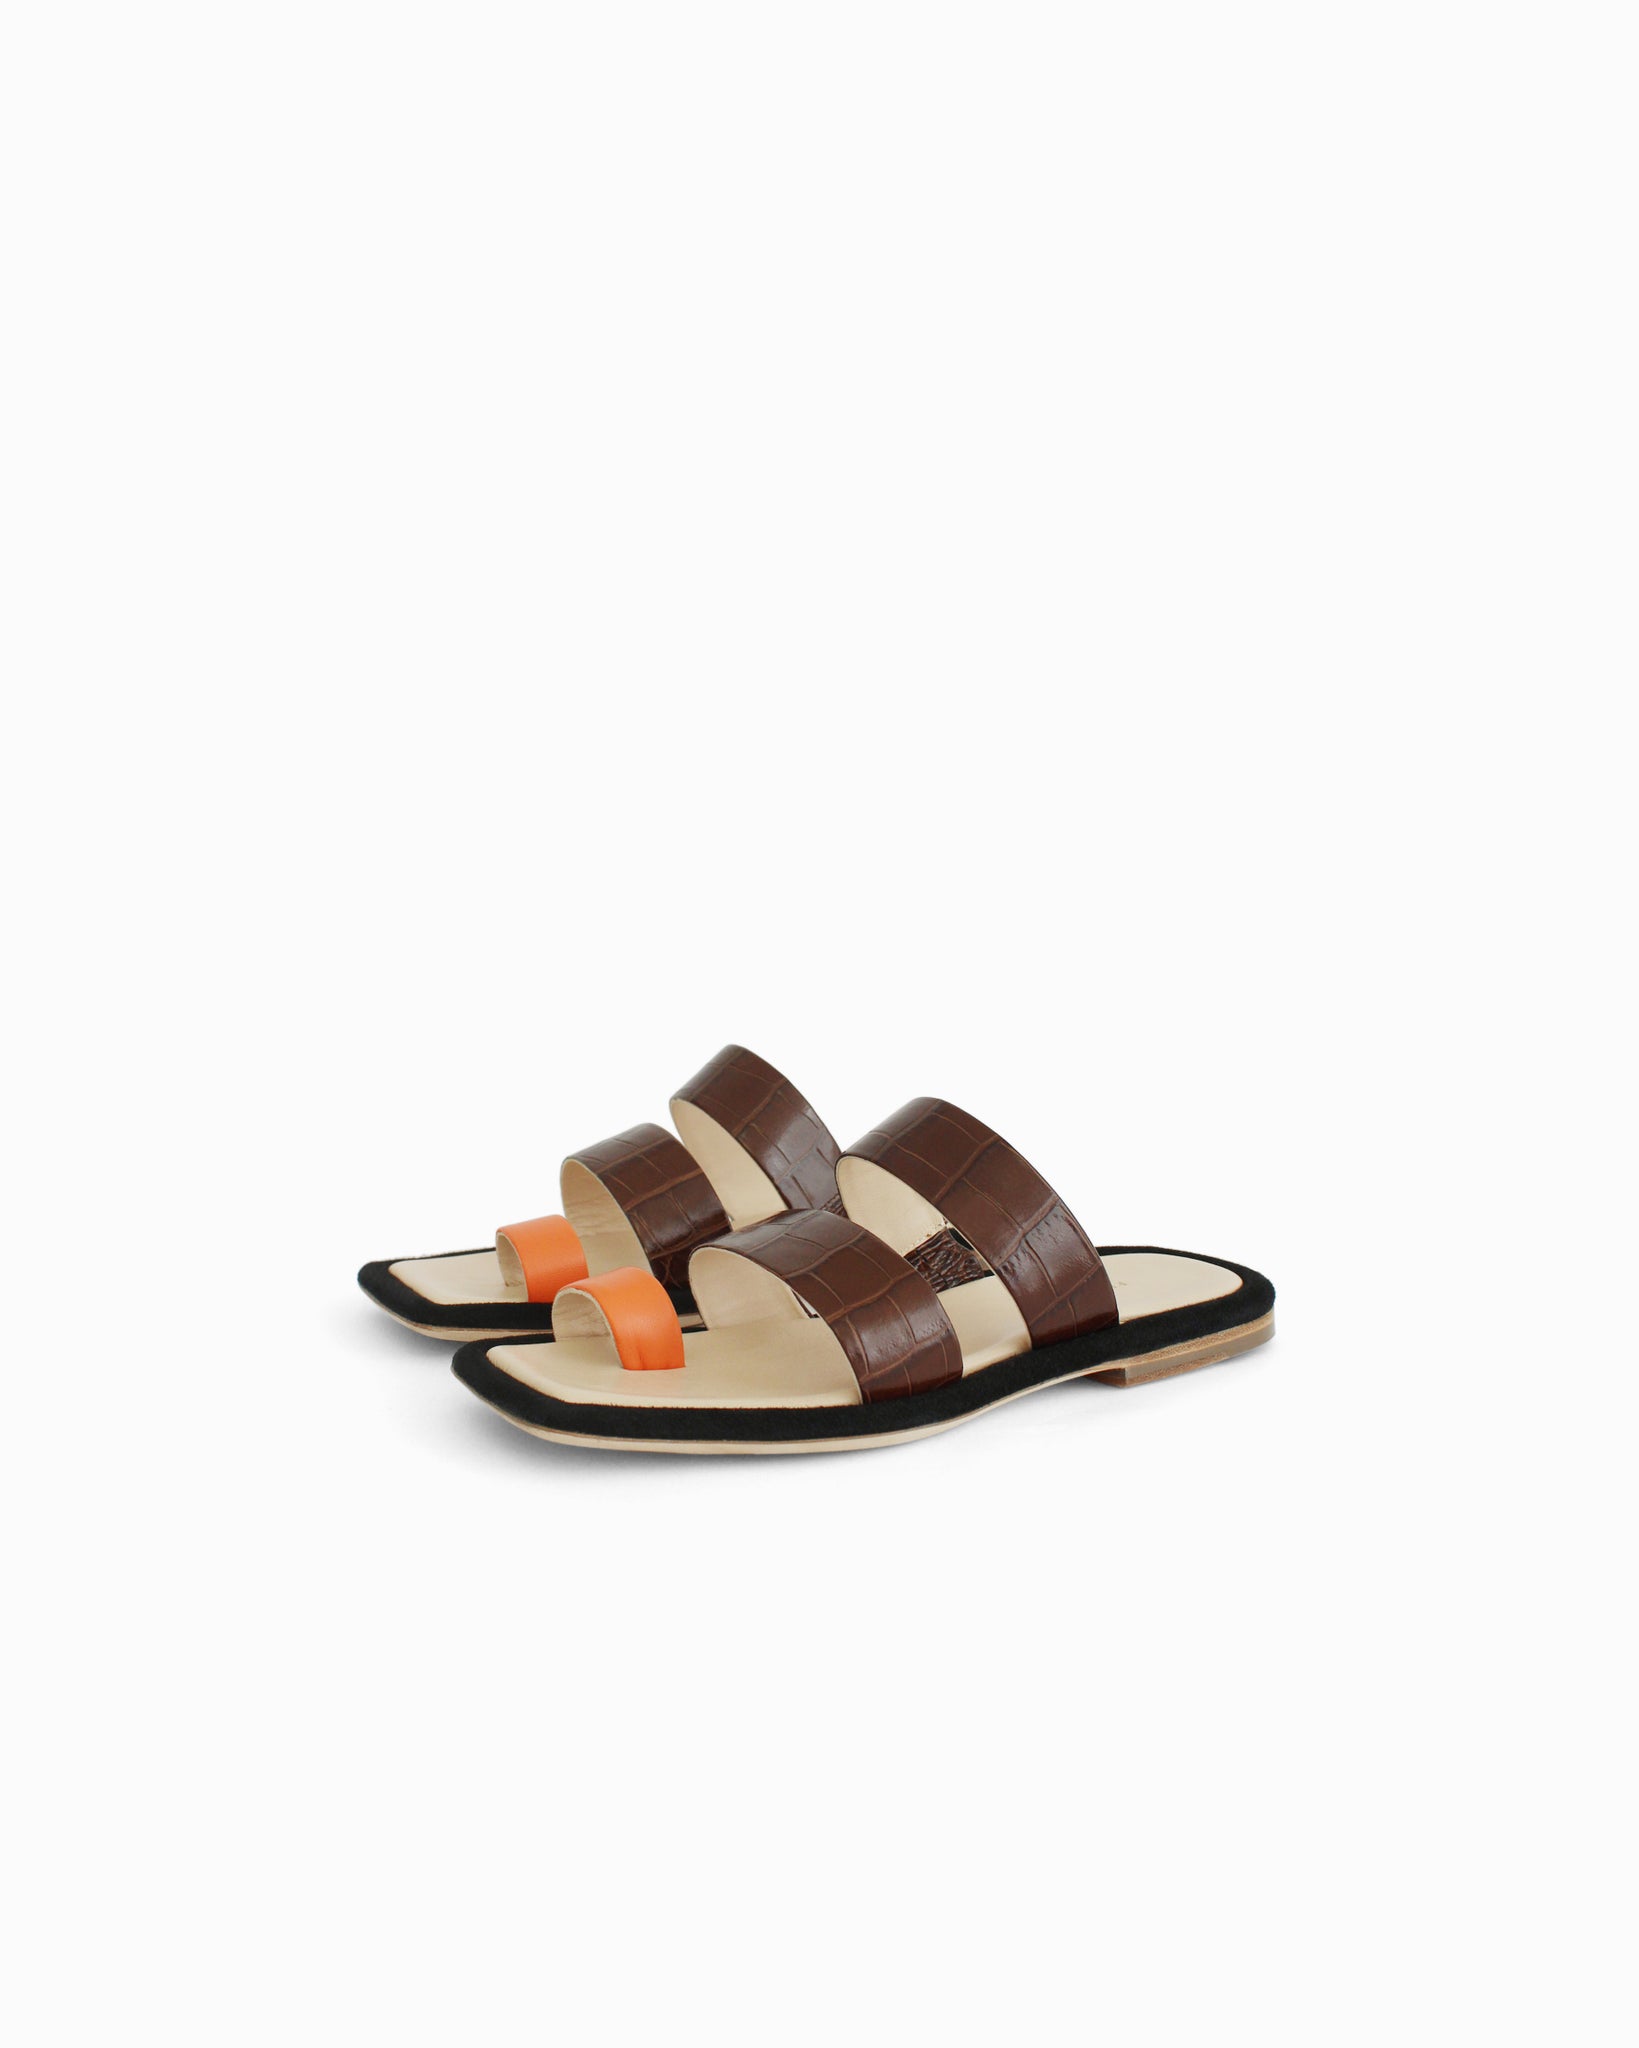 Larissa Sandals Leather Croc Brown Orange